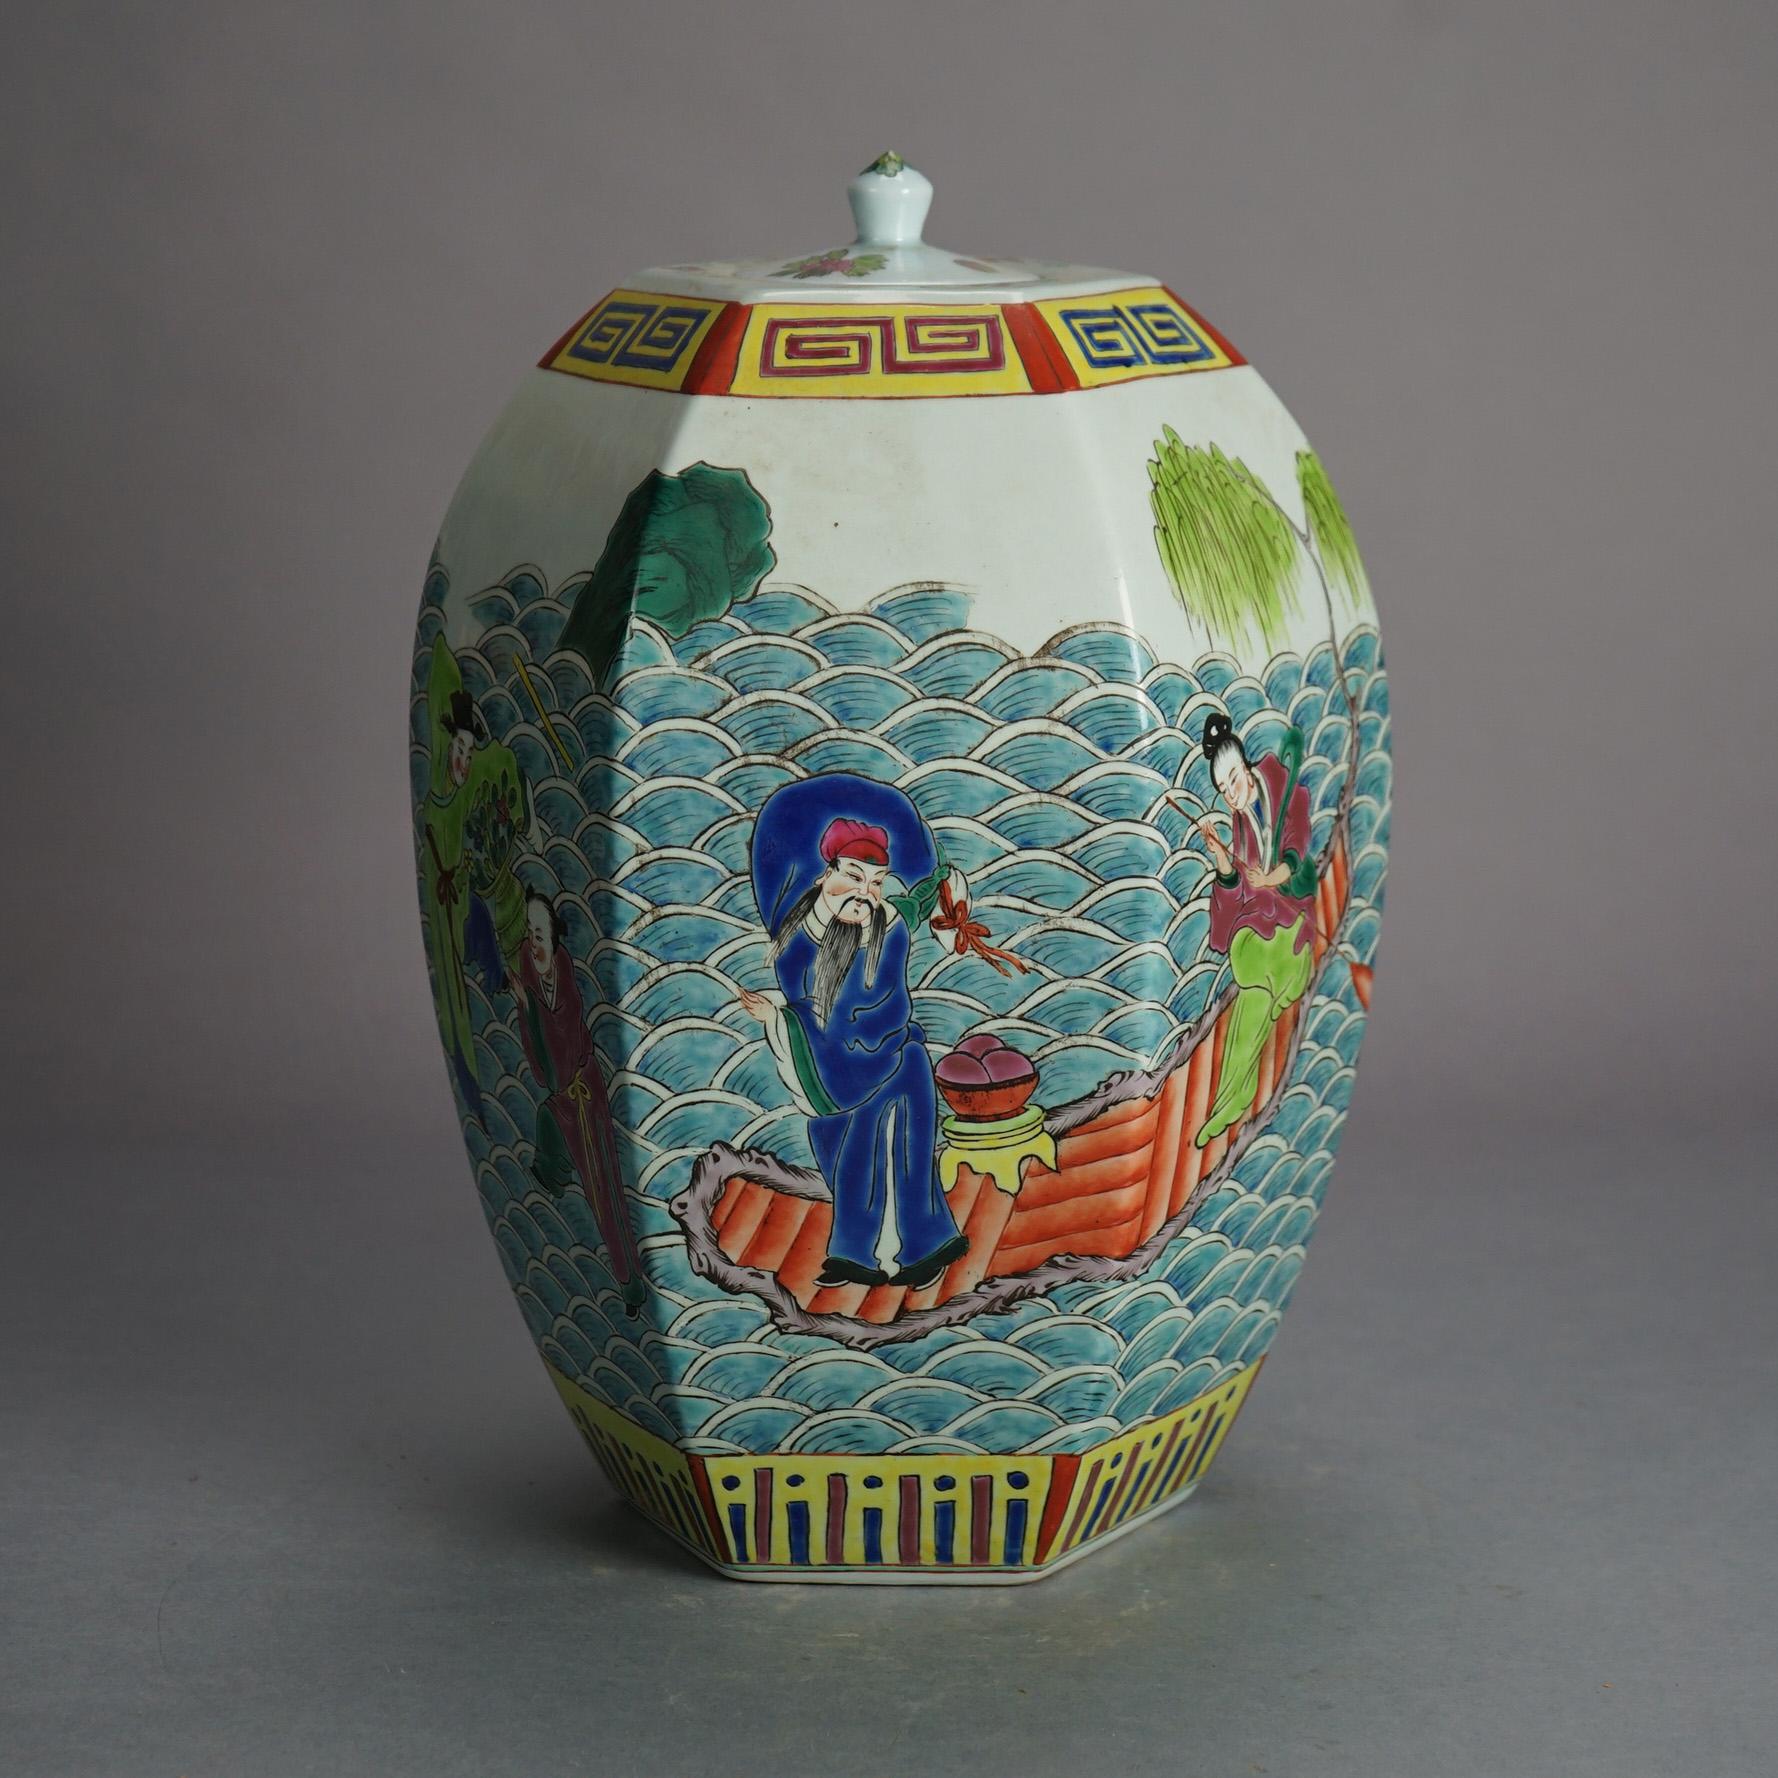 Chinese Enameled Porcelain Figural & Faceted Lidded Jar with Genre Scene 20thC

Measures - 14